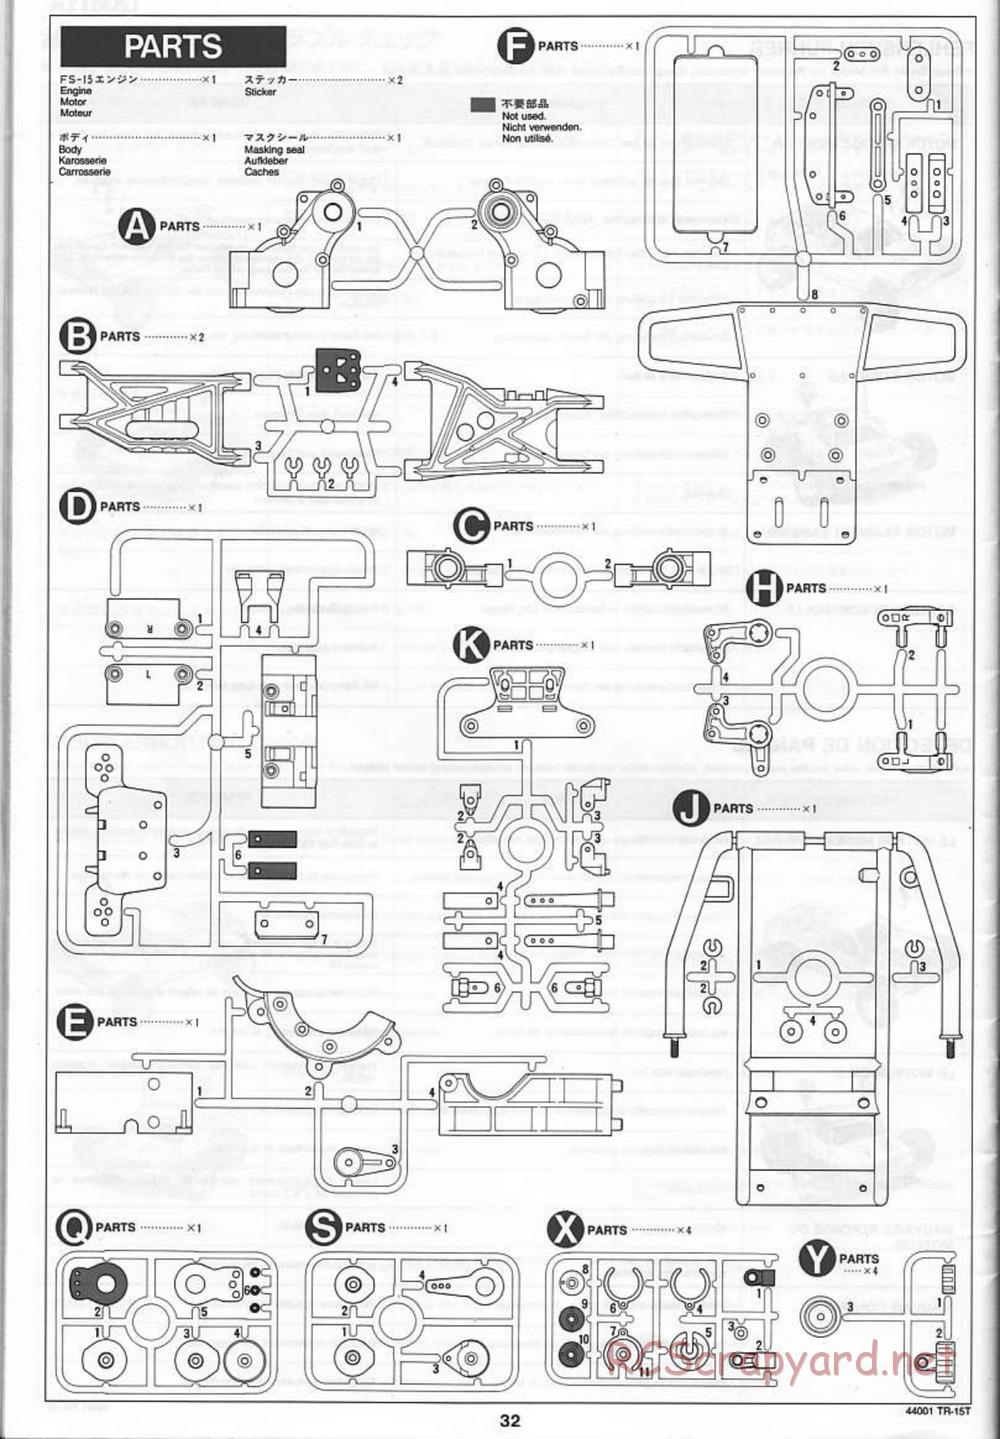 Tamiya - Stadium Racing Truck TR-15T Chassis - Manual - Page 32